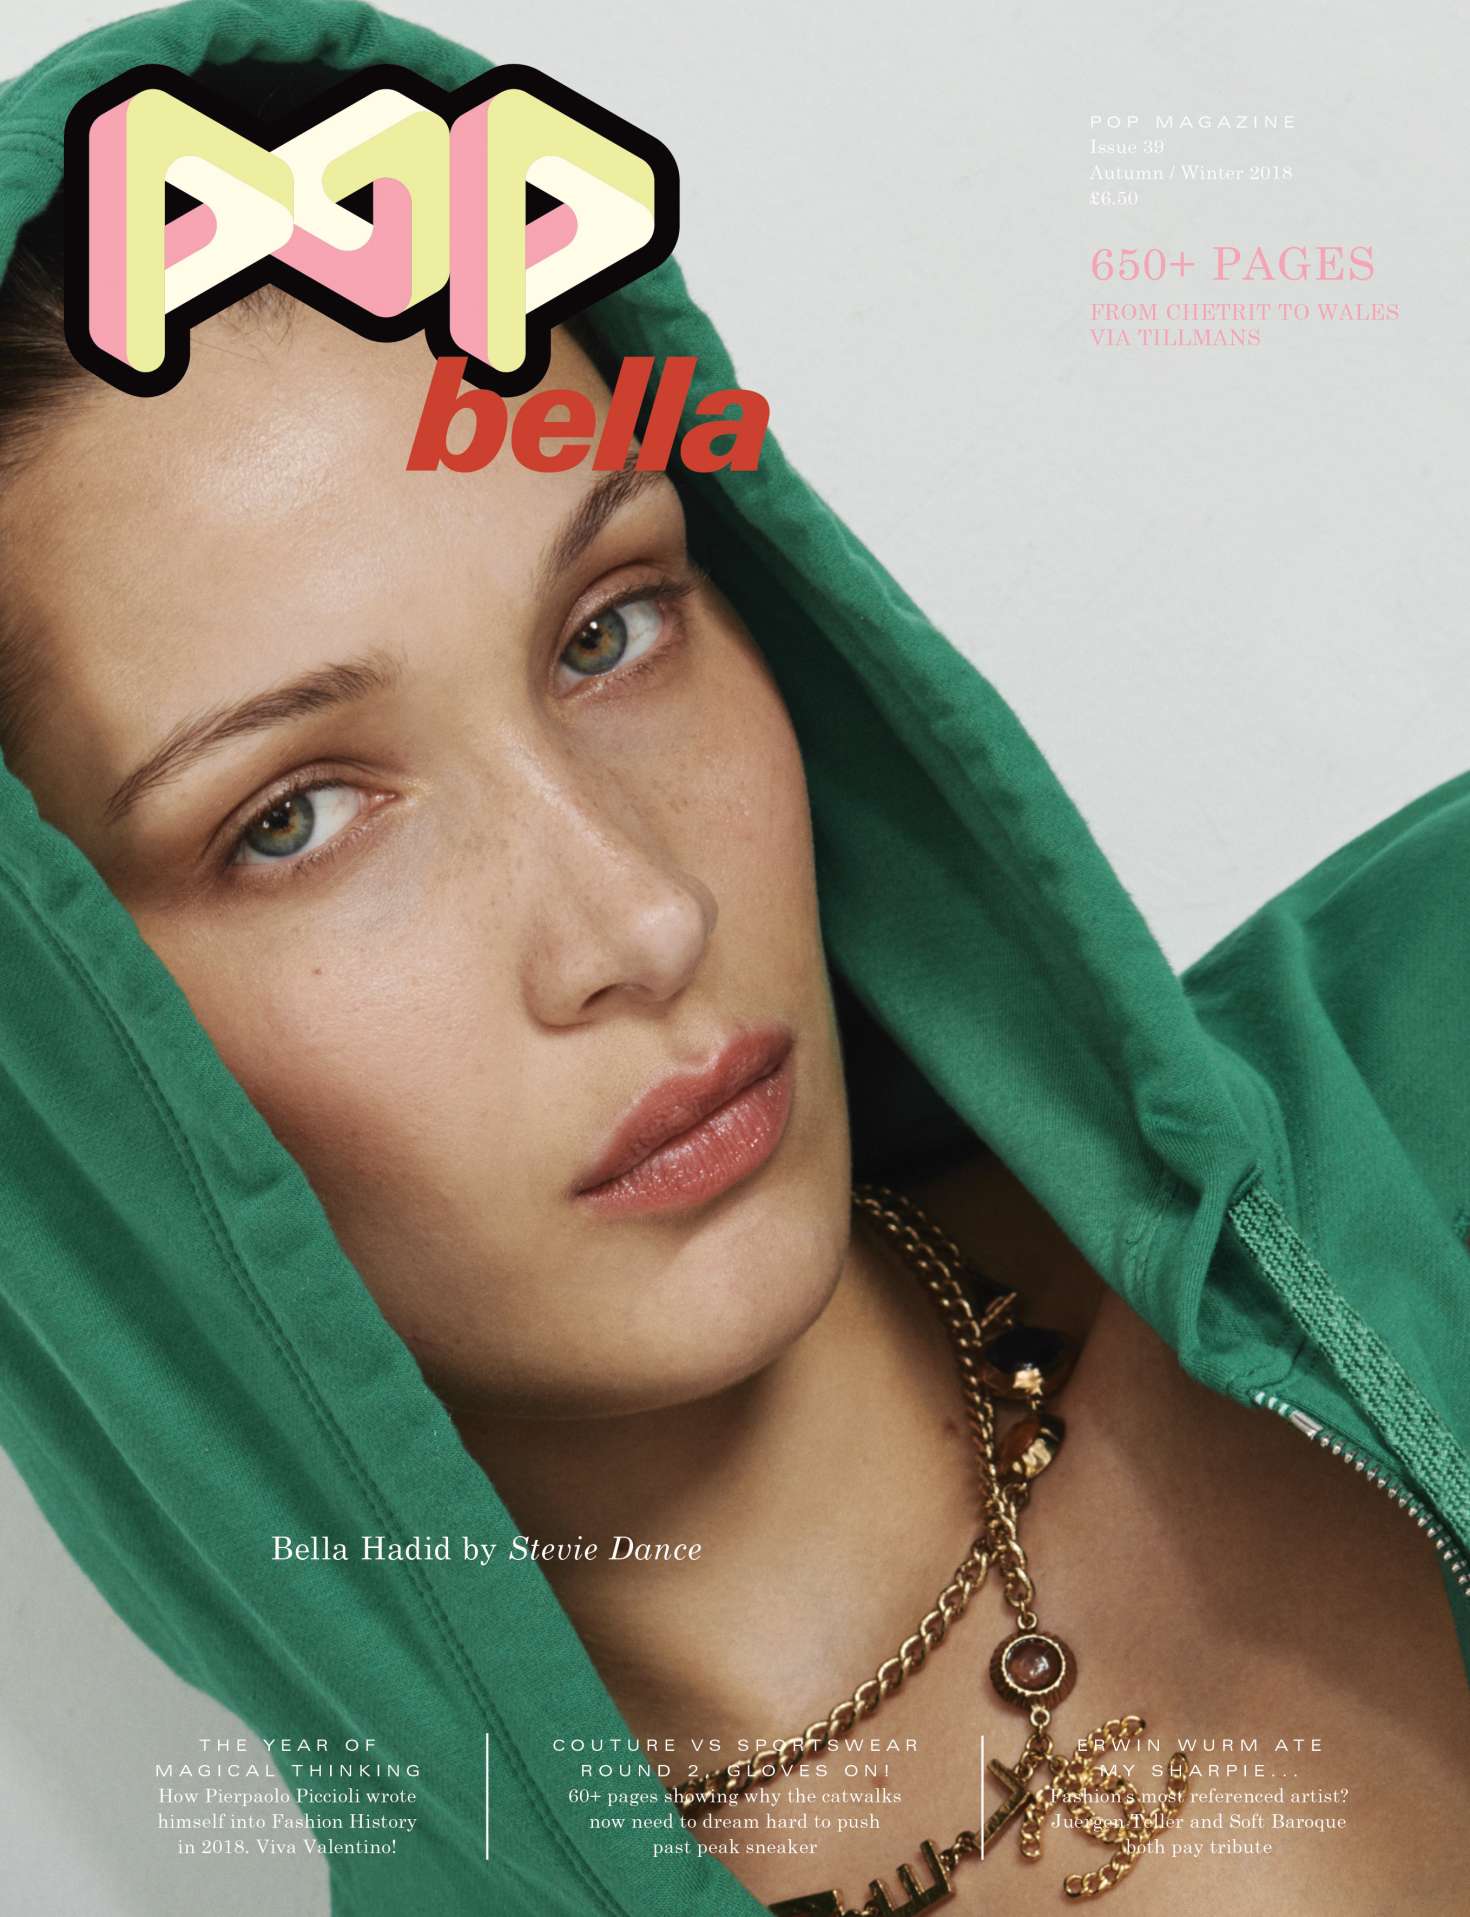 Bella Hadid â€“ Pop Magazine (September 2018) adds